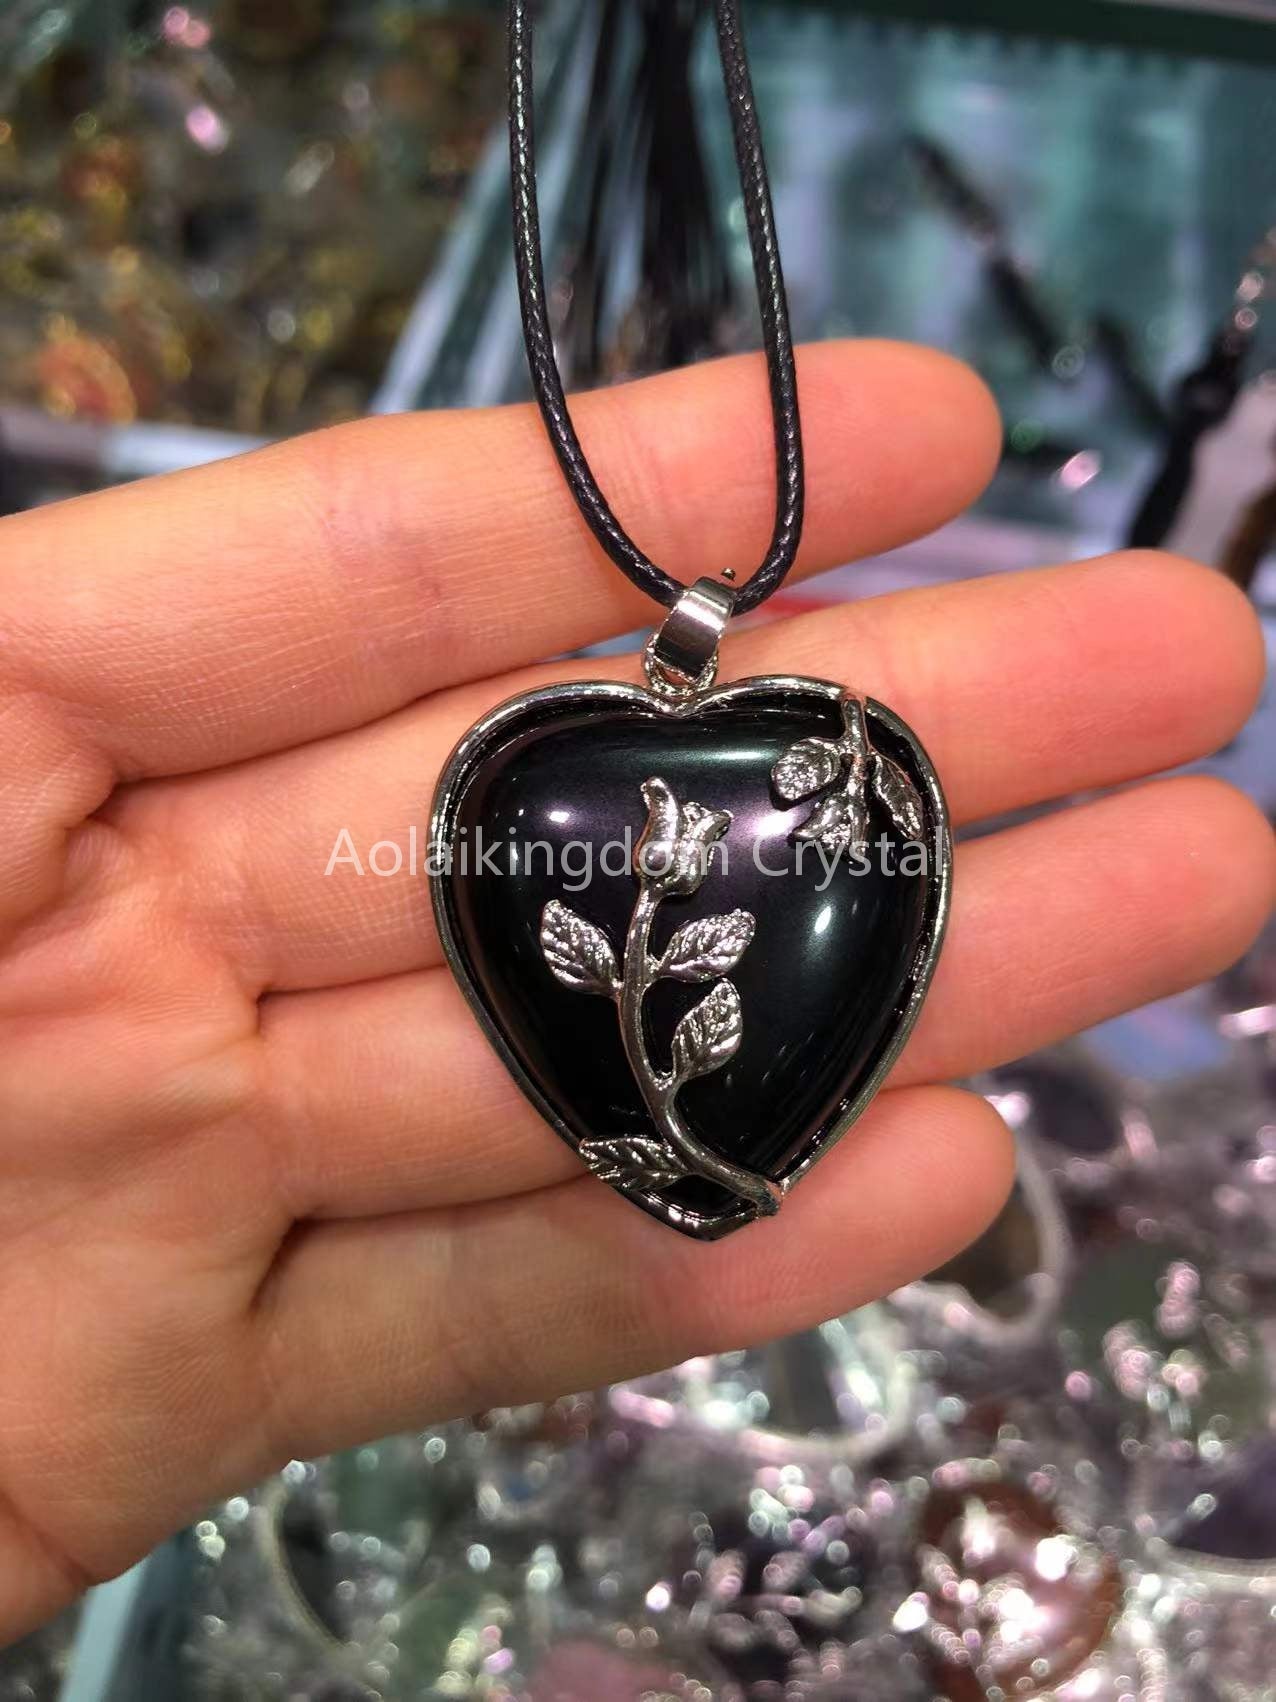 Crystal heartflower pendant/necklace